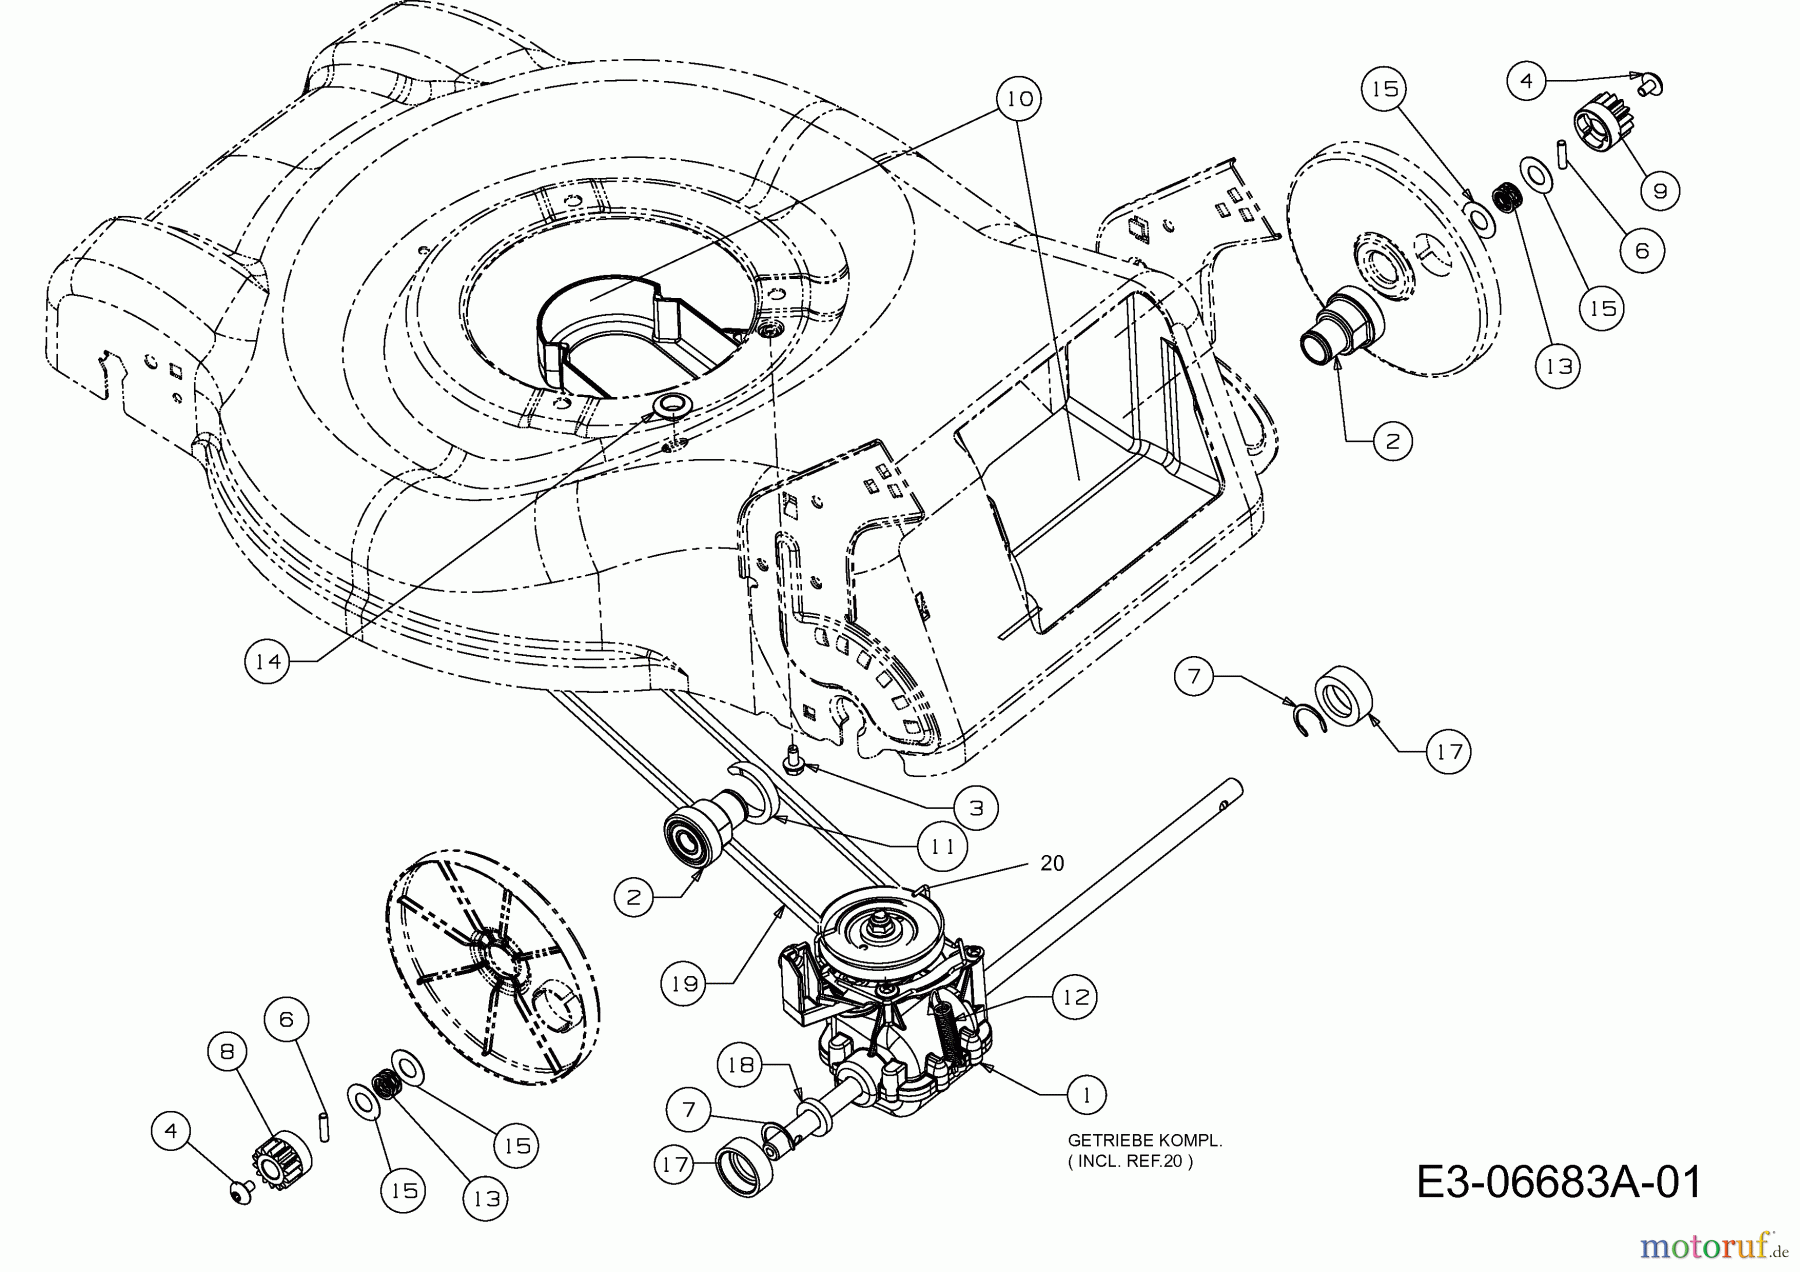  Sterwins Motormäher mit Antrieb 420 BTC 12A-I44M638  (2011) Getriebe